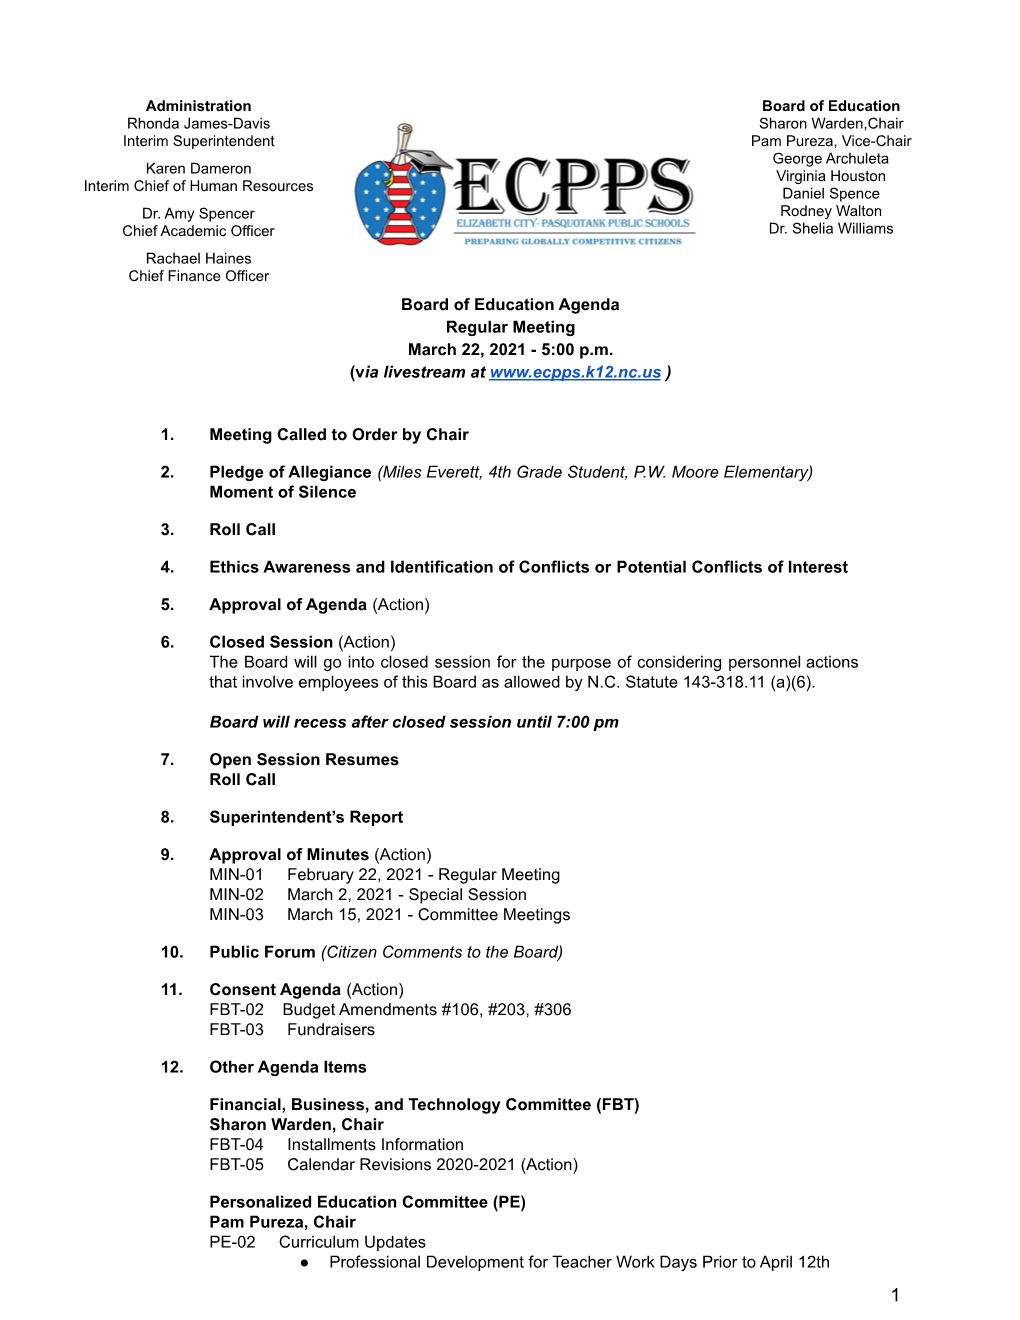 Board of Education Agenda Regular Meeting March 22, 2021 - 5:00 P.M